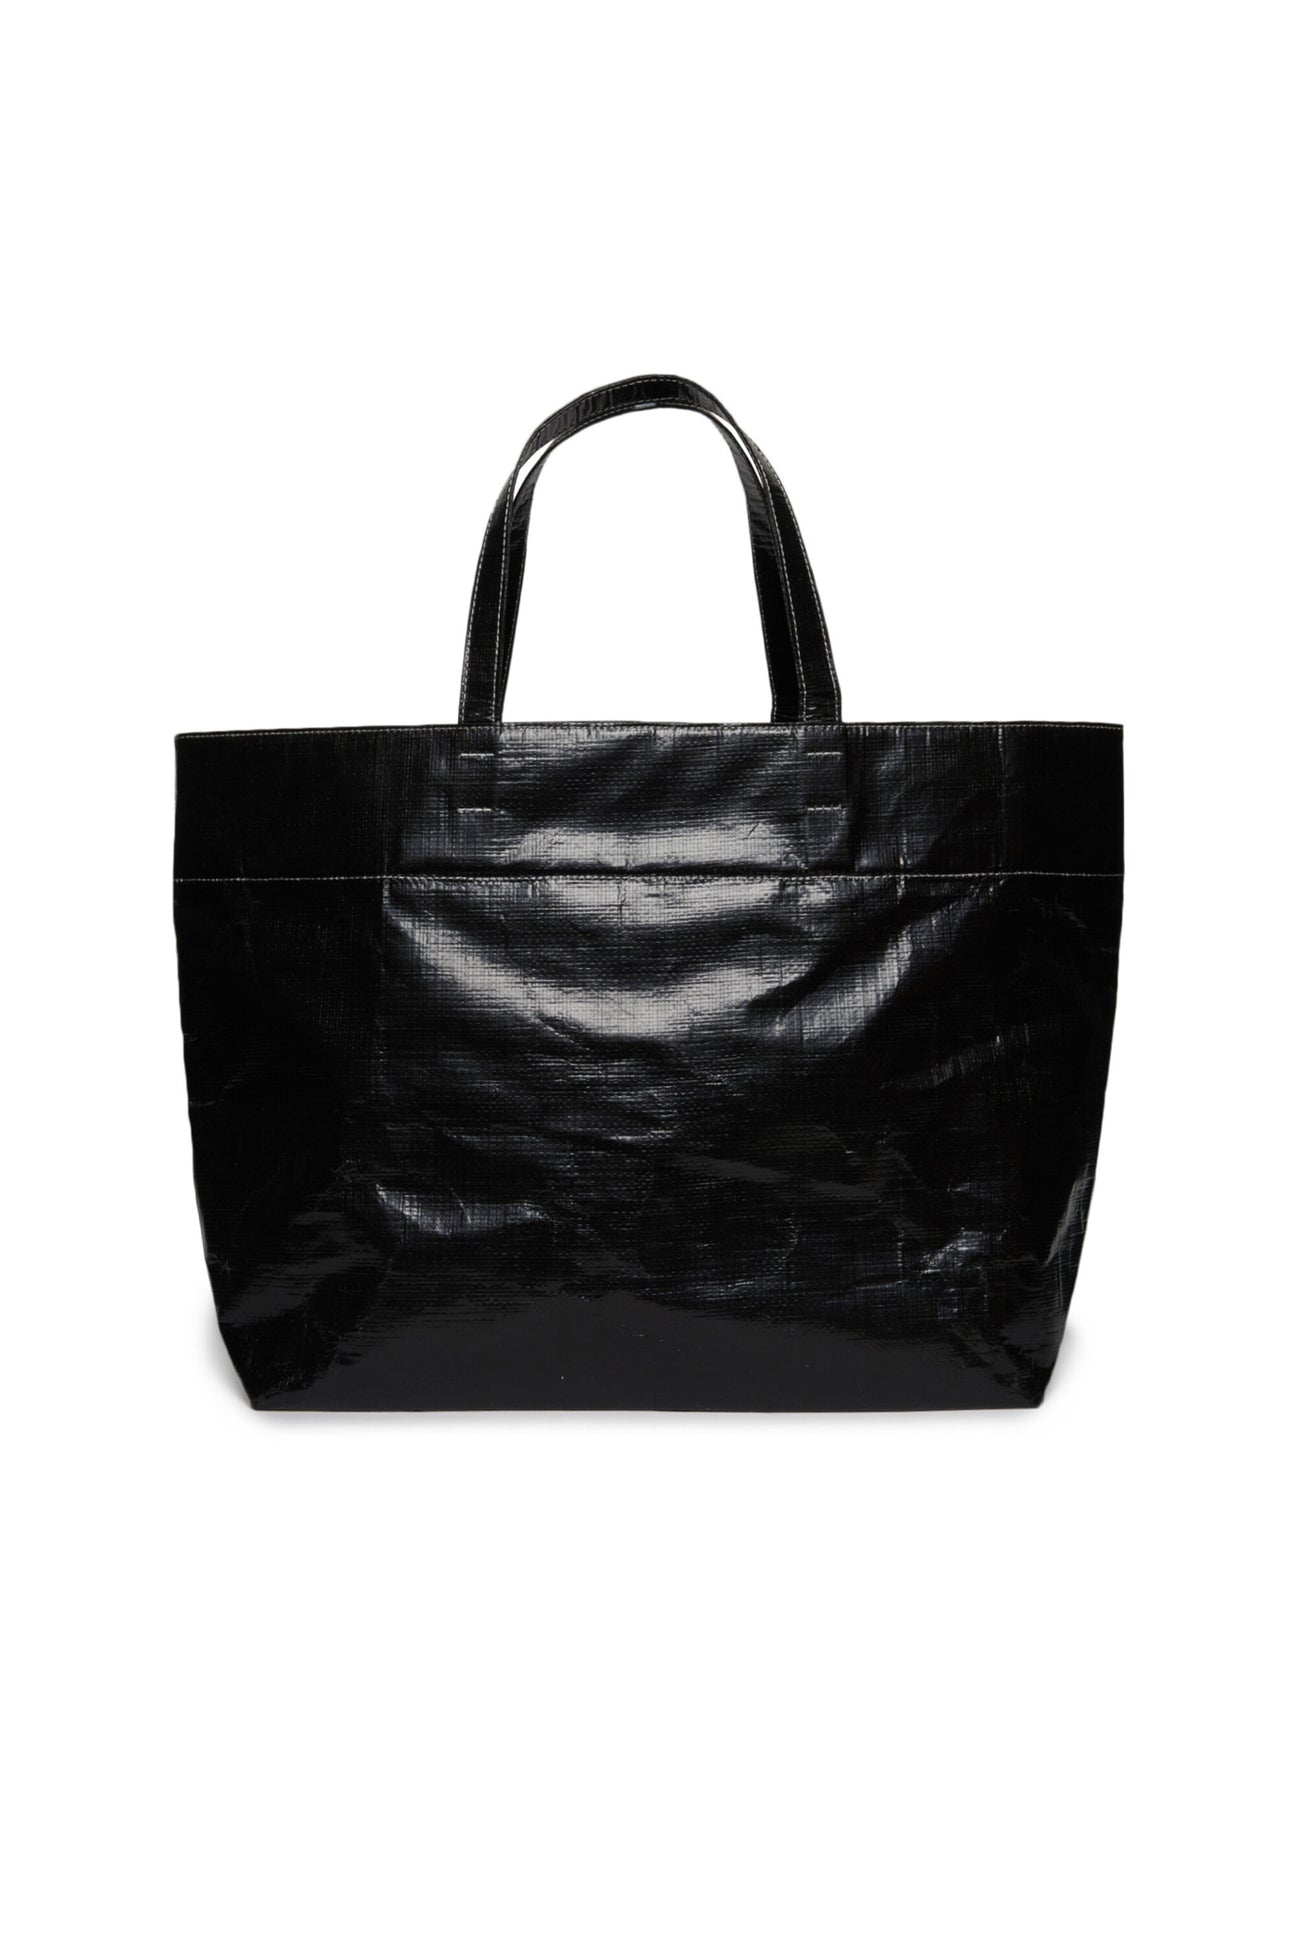 Black shopper bag with institutional logo Black shopper bag with institutional logo